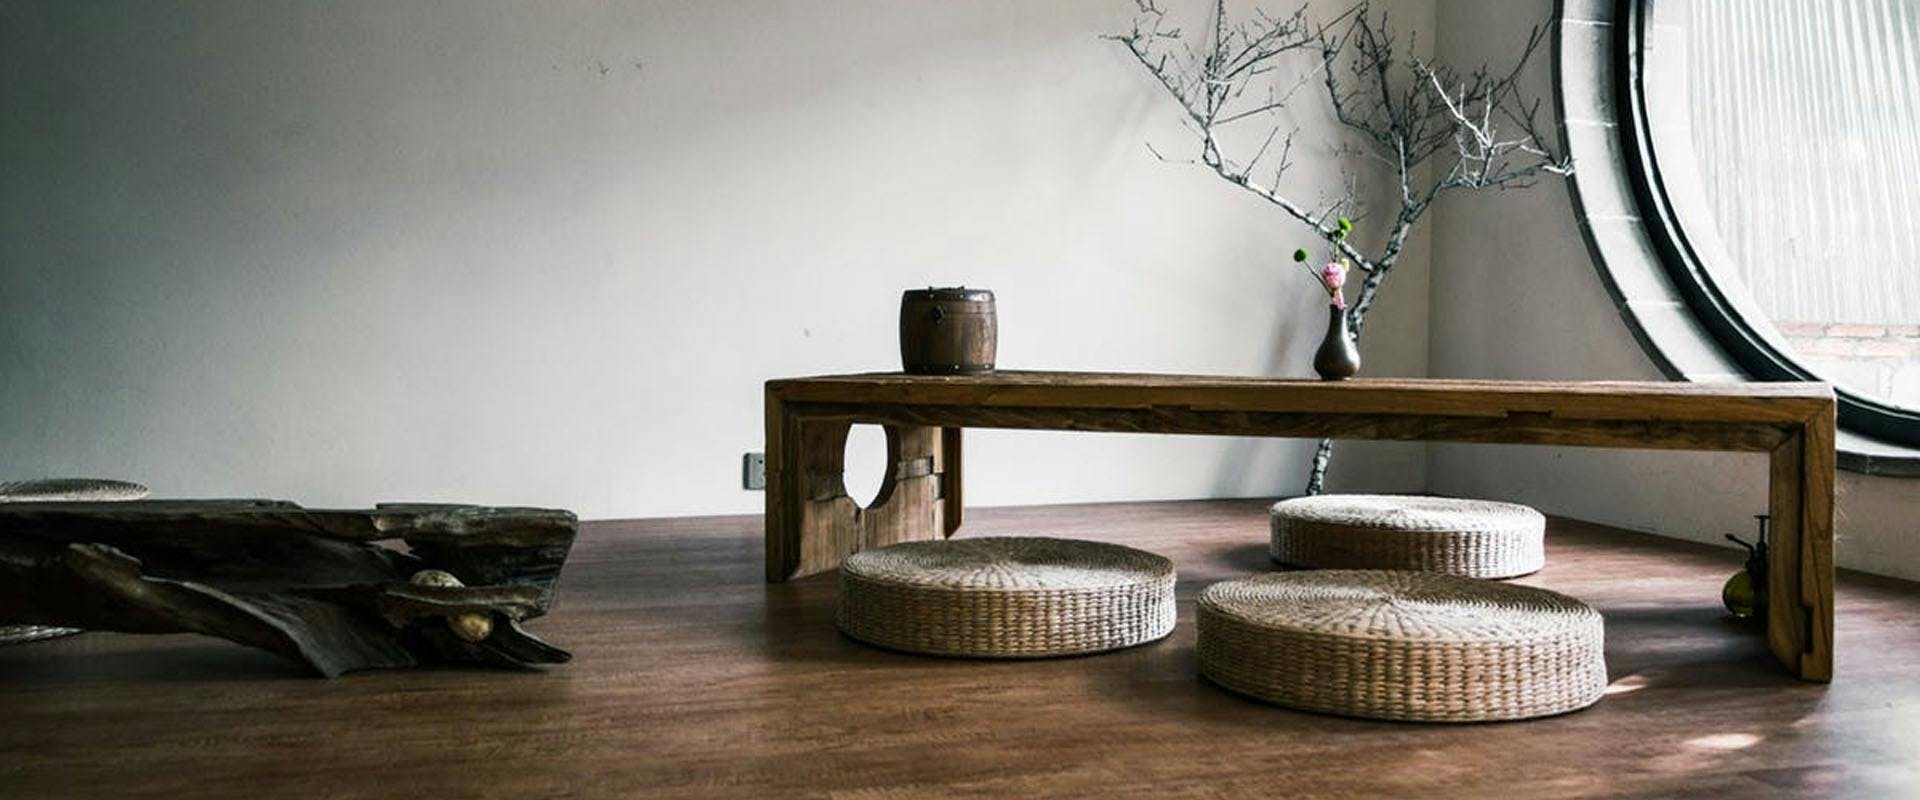 ikebana vase jar pottery plant art furniture wood interior design table